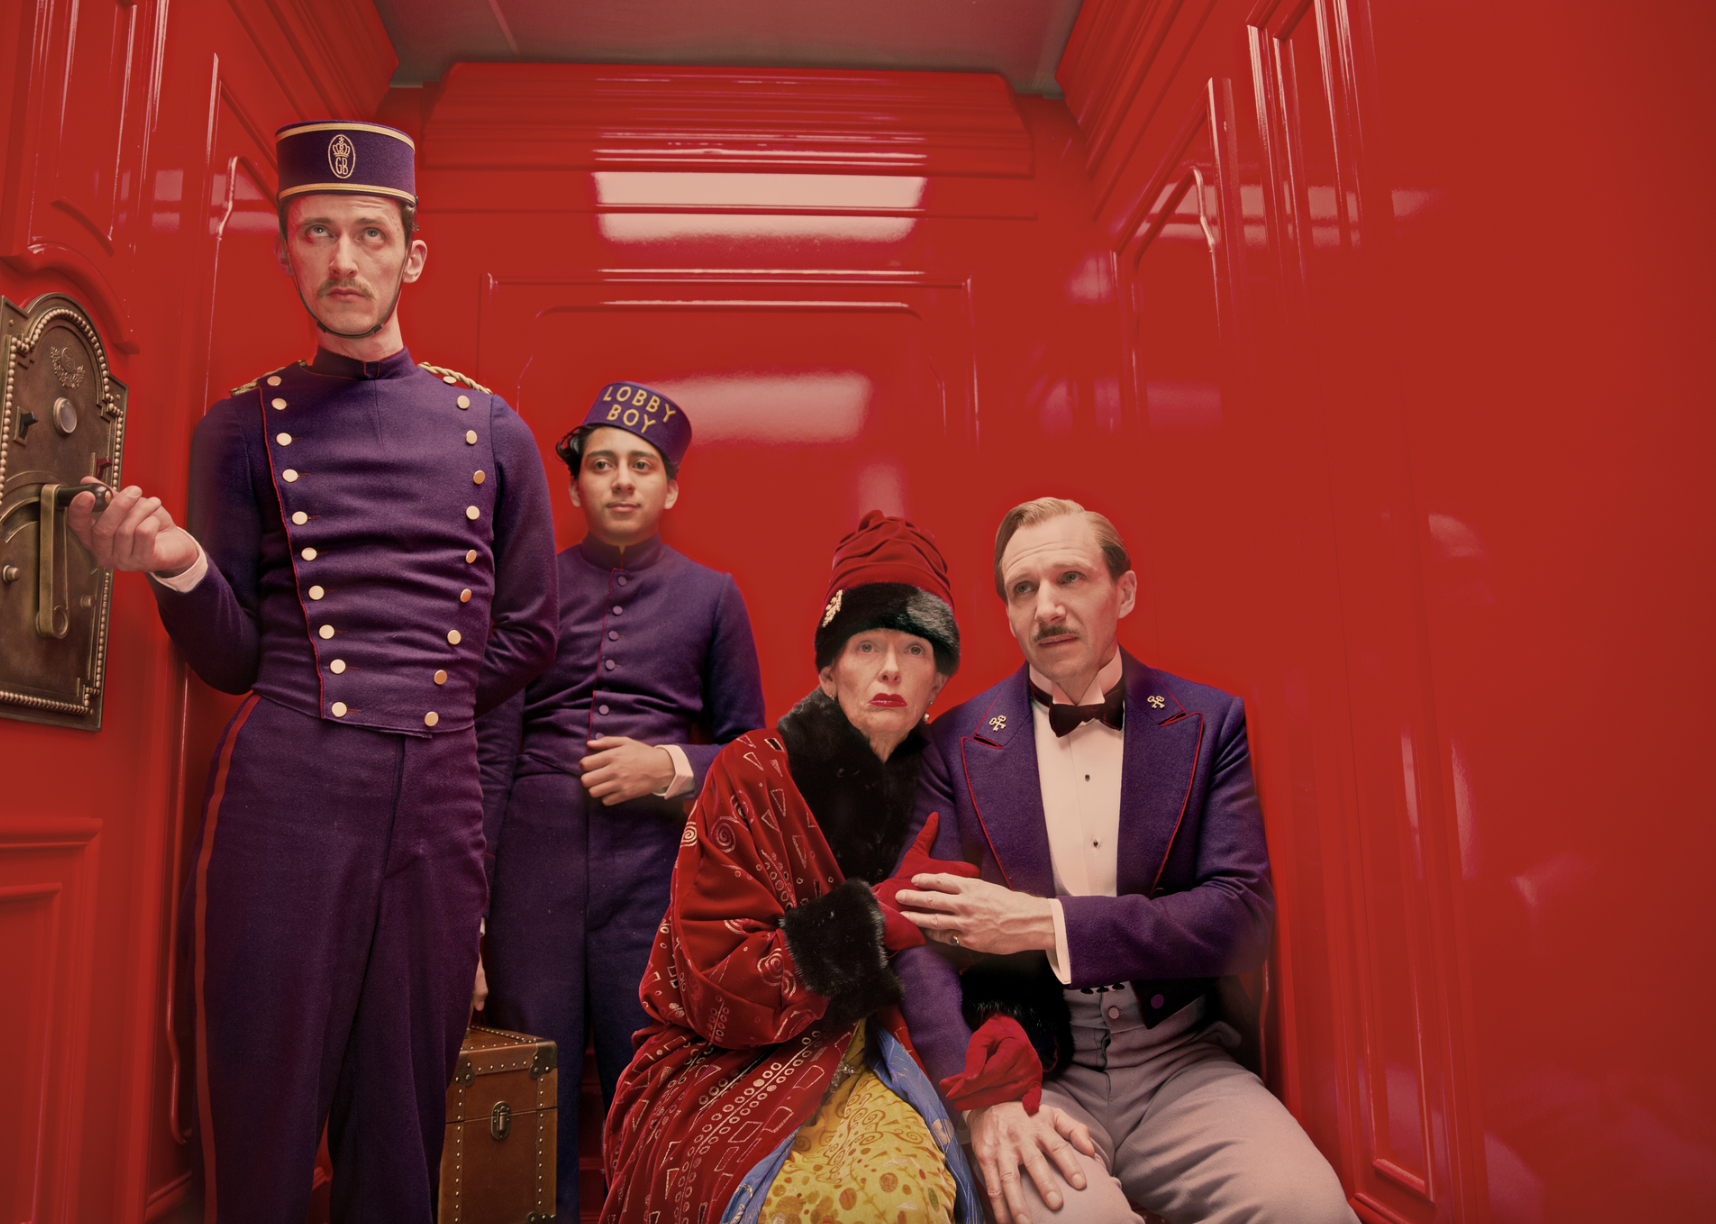 Ralph Fiennes, Tilda Swinton, Tony Revolori, and Paul Schlase in "The Grand Budapest Hotel"